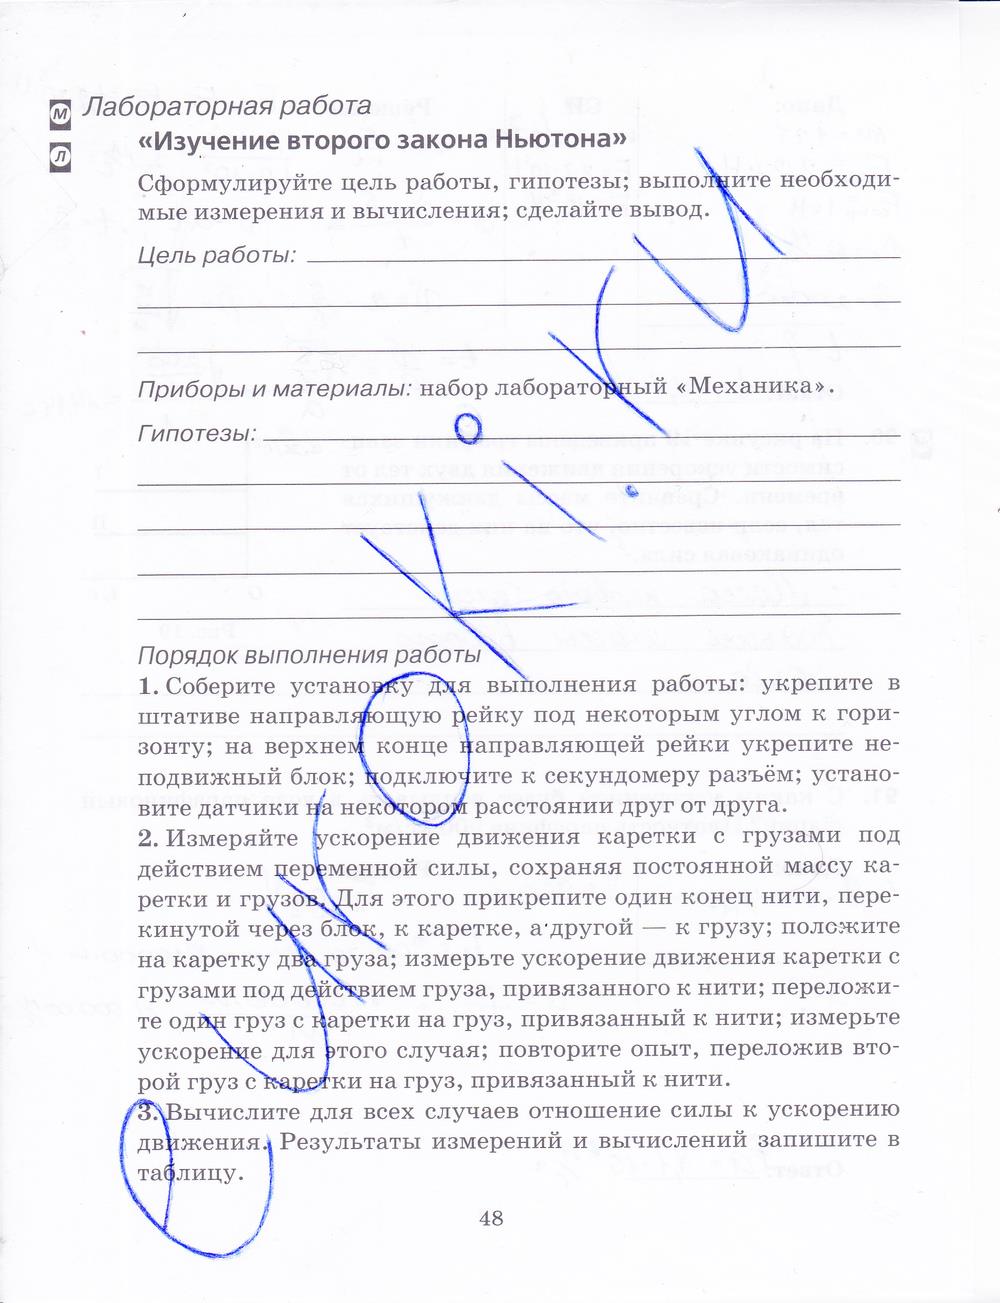 гдз 9 класс рабочая тетрадь страница 48 физика Пурышева, Важеевская, Чаругин